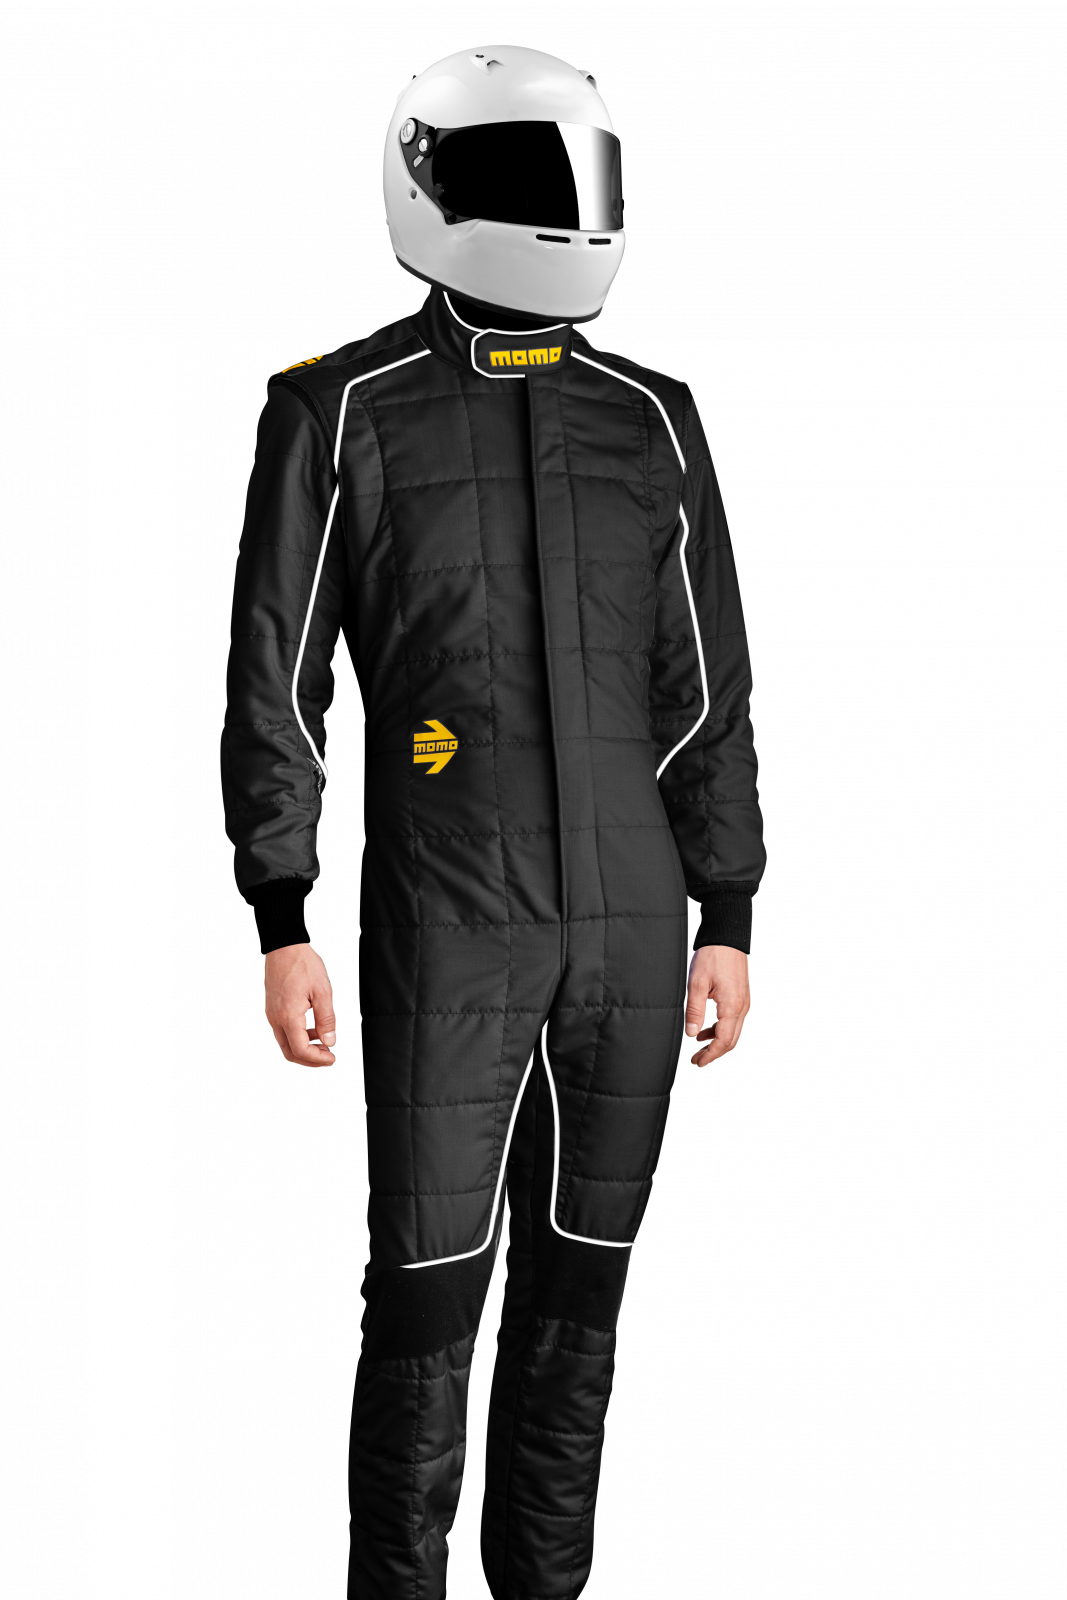 MOMO Corsa Evo Black Size 56 Racing Suit TUCOEVOBLK56